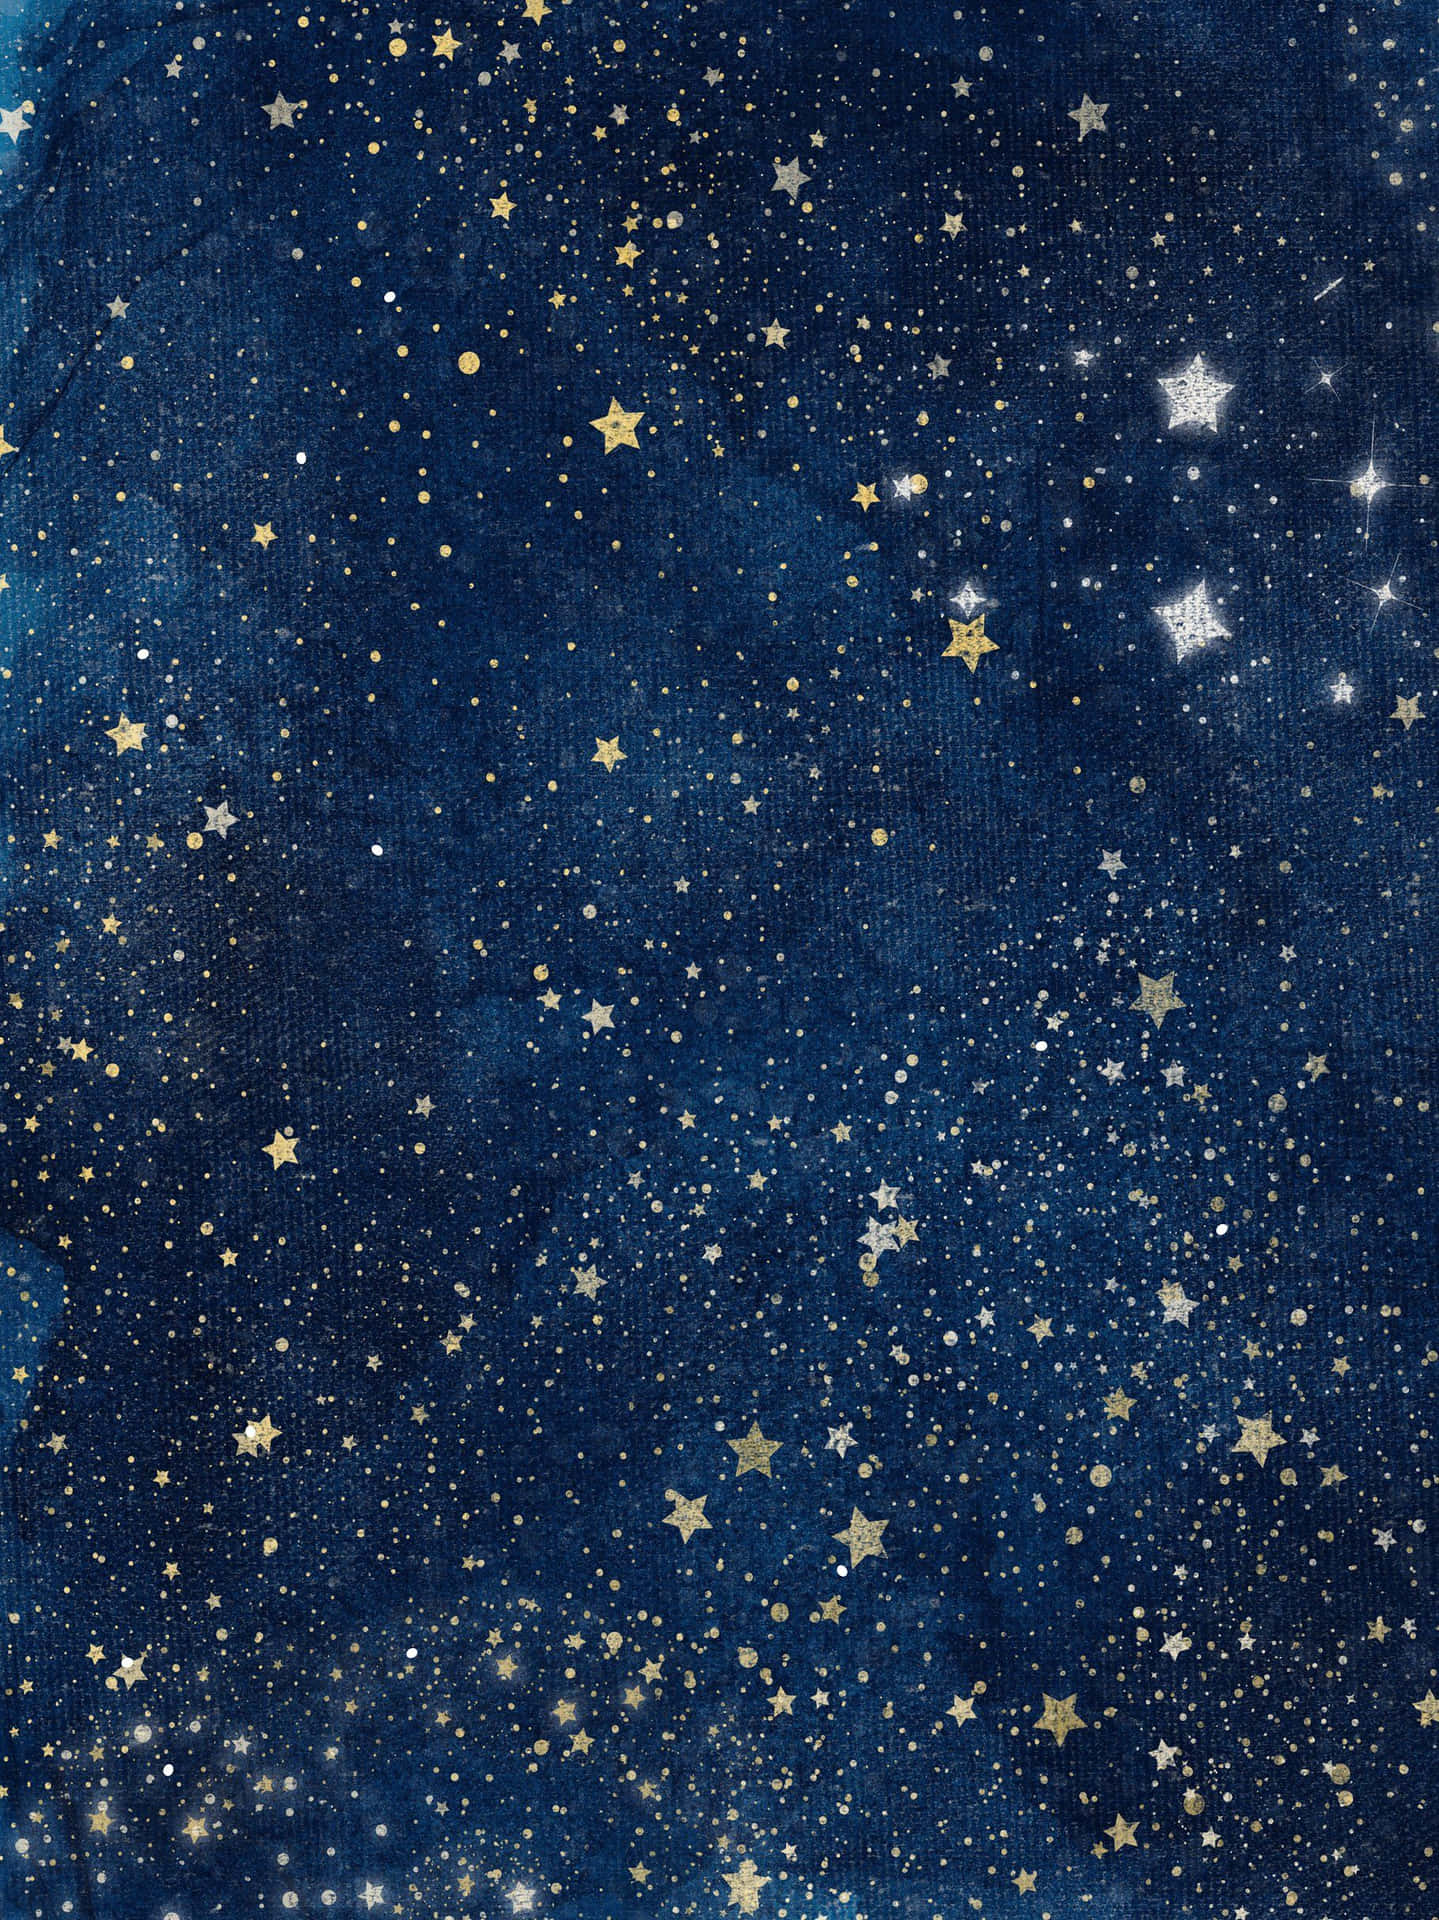 "A Starry Night"